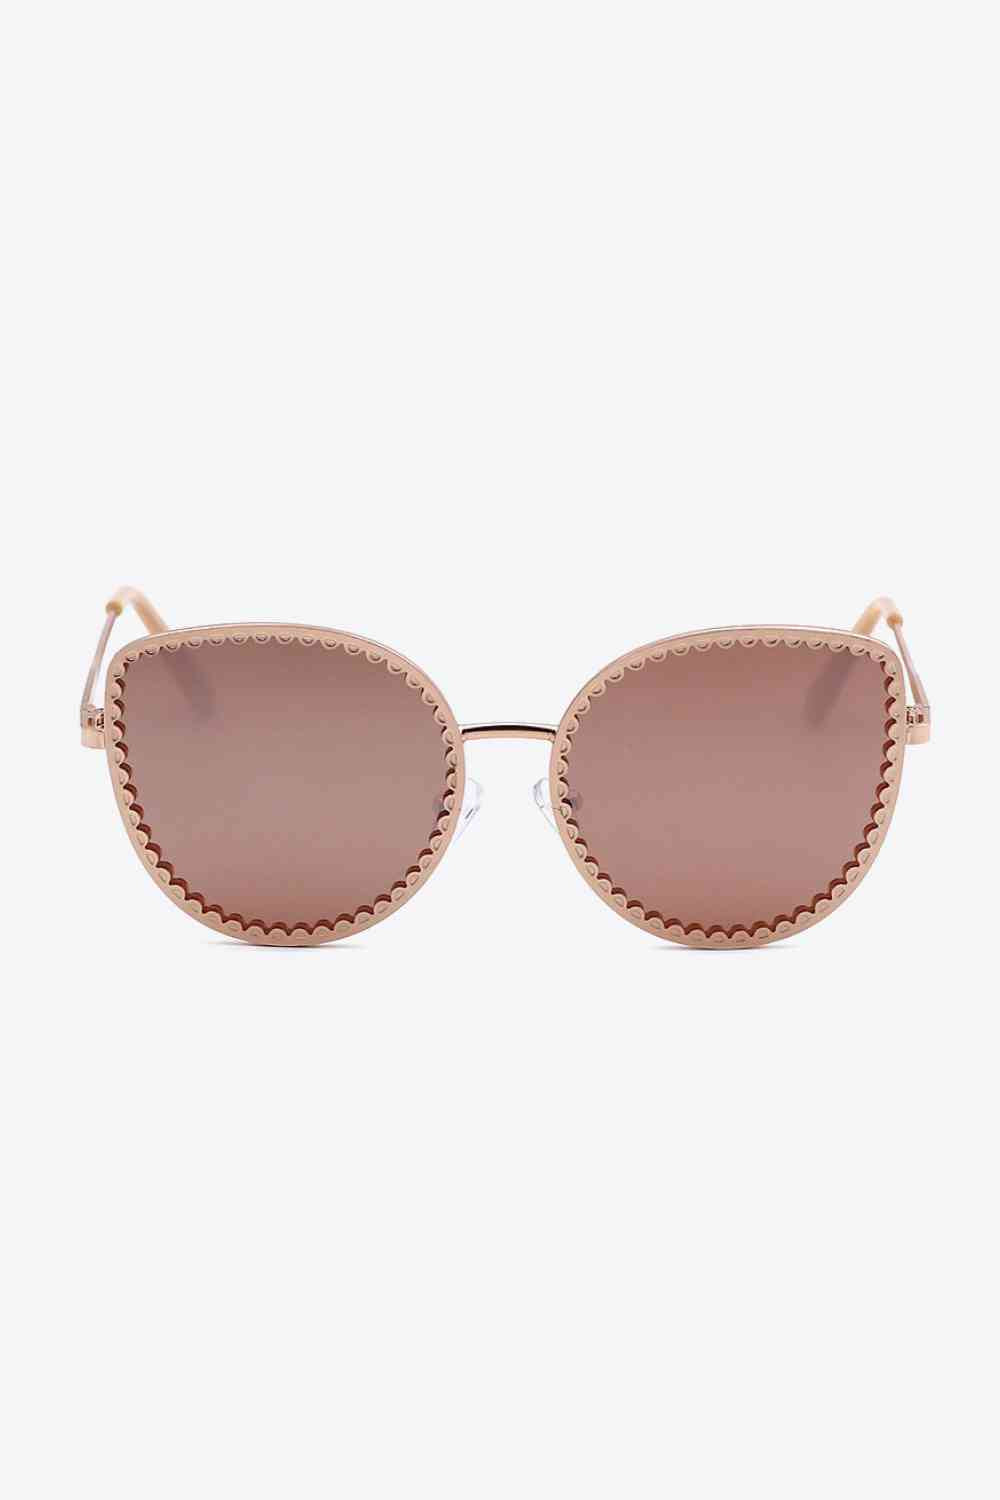 TEEK - Felicia Full Rim Sunglasses EYEGLASSES TEEK Trend   